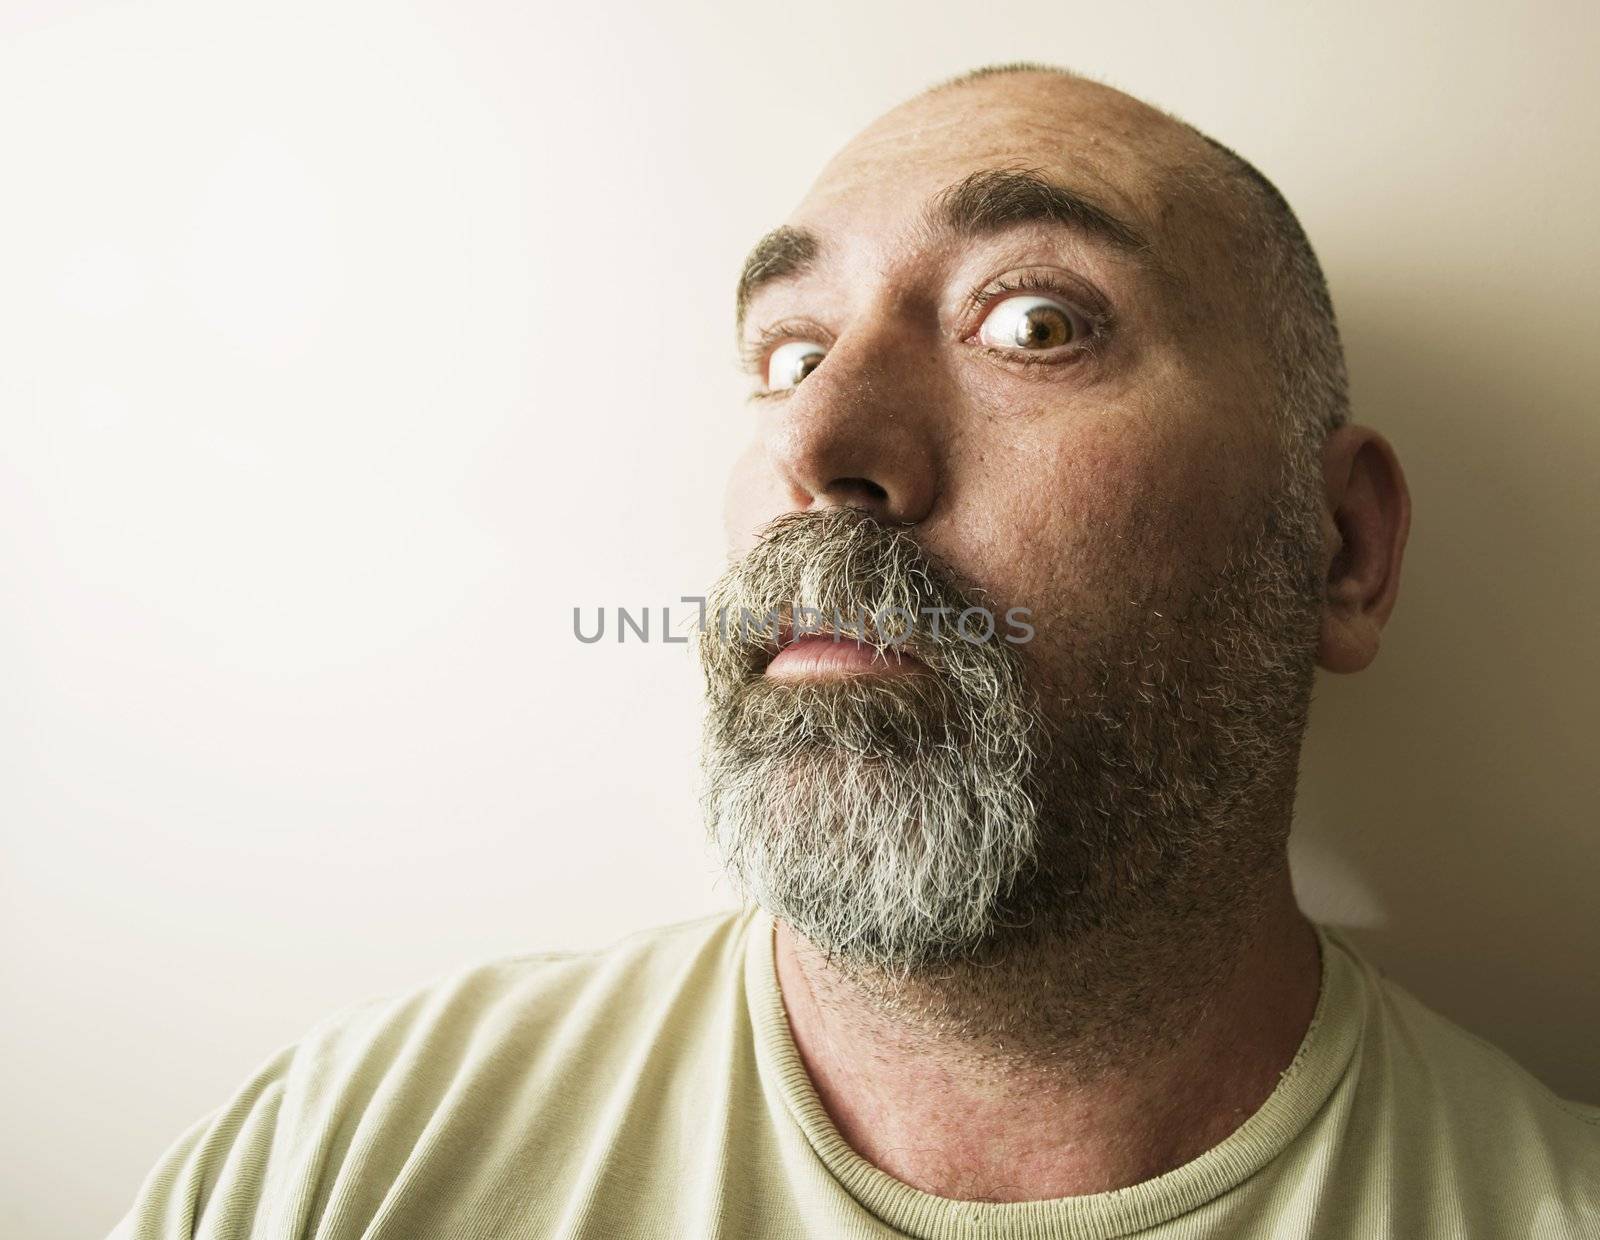 Portrait of a suspicious bald man with a beard.